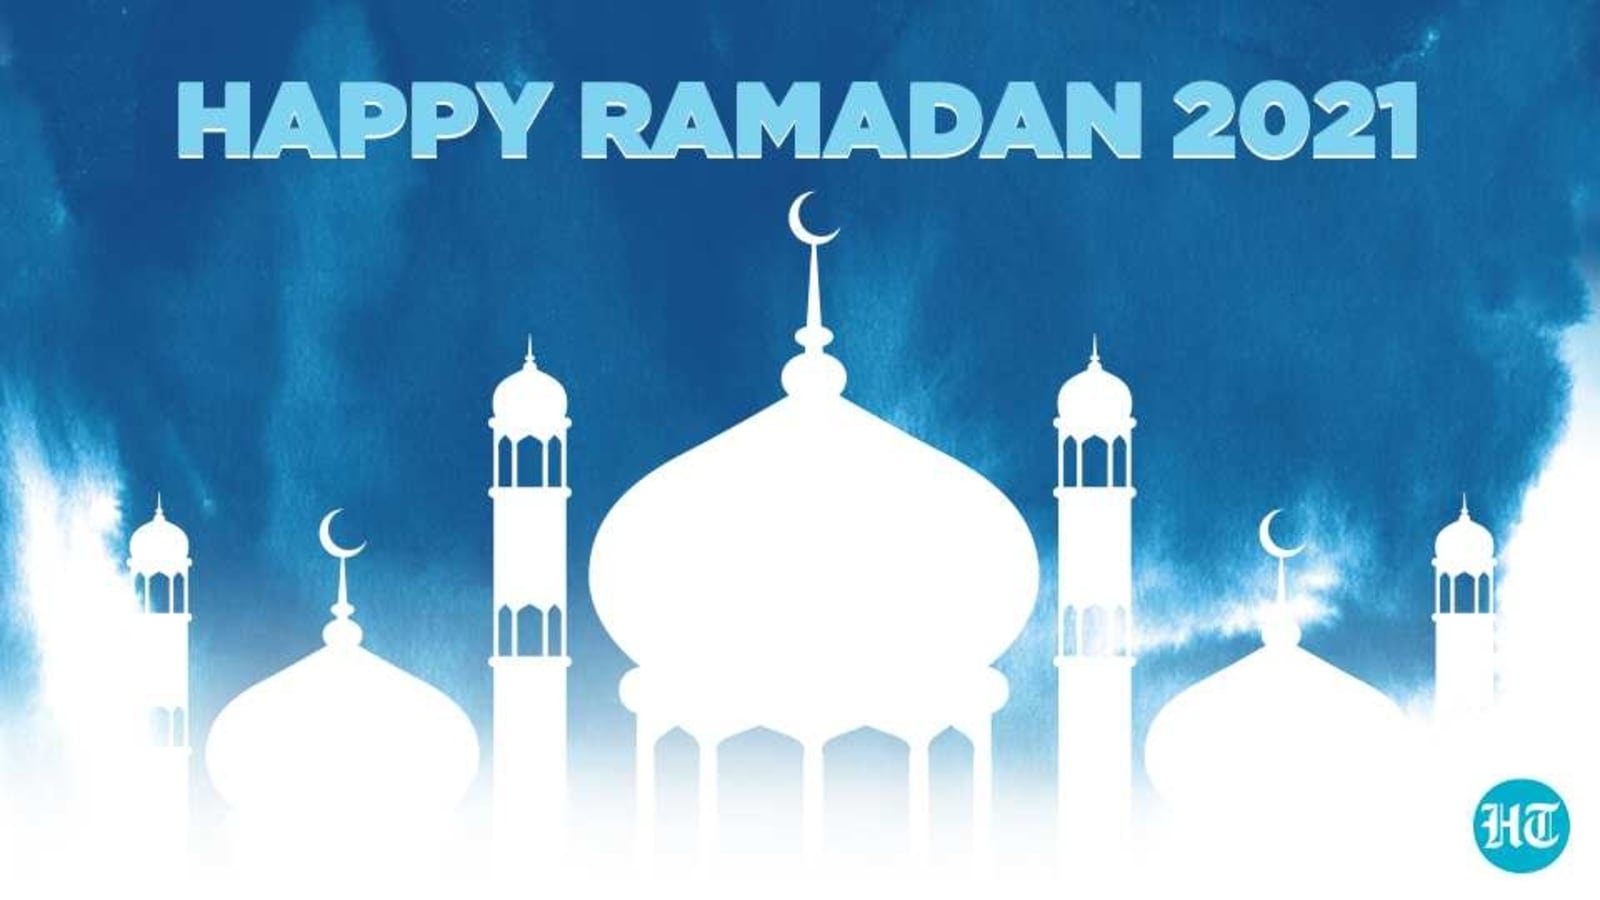 Happy ramadan wishes